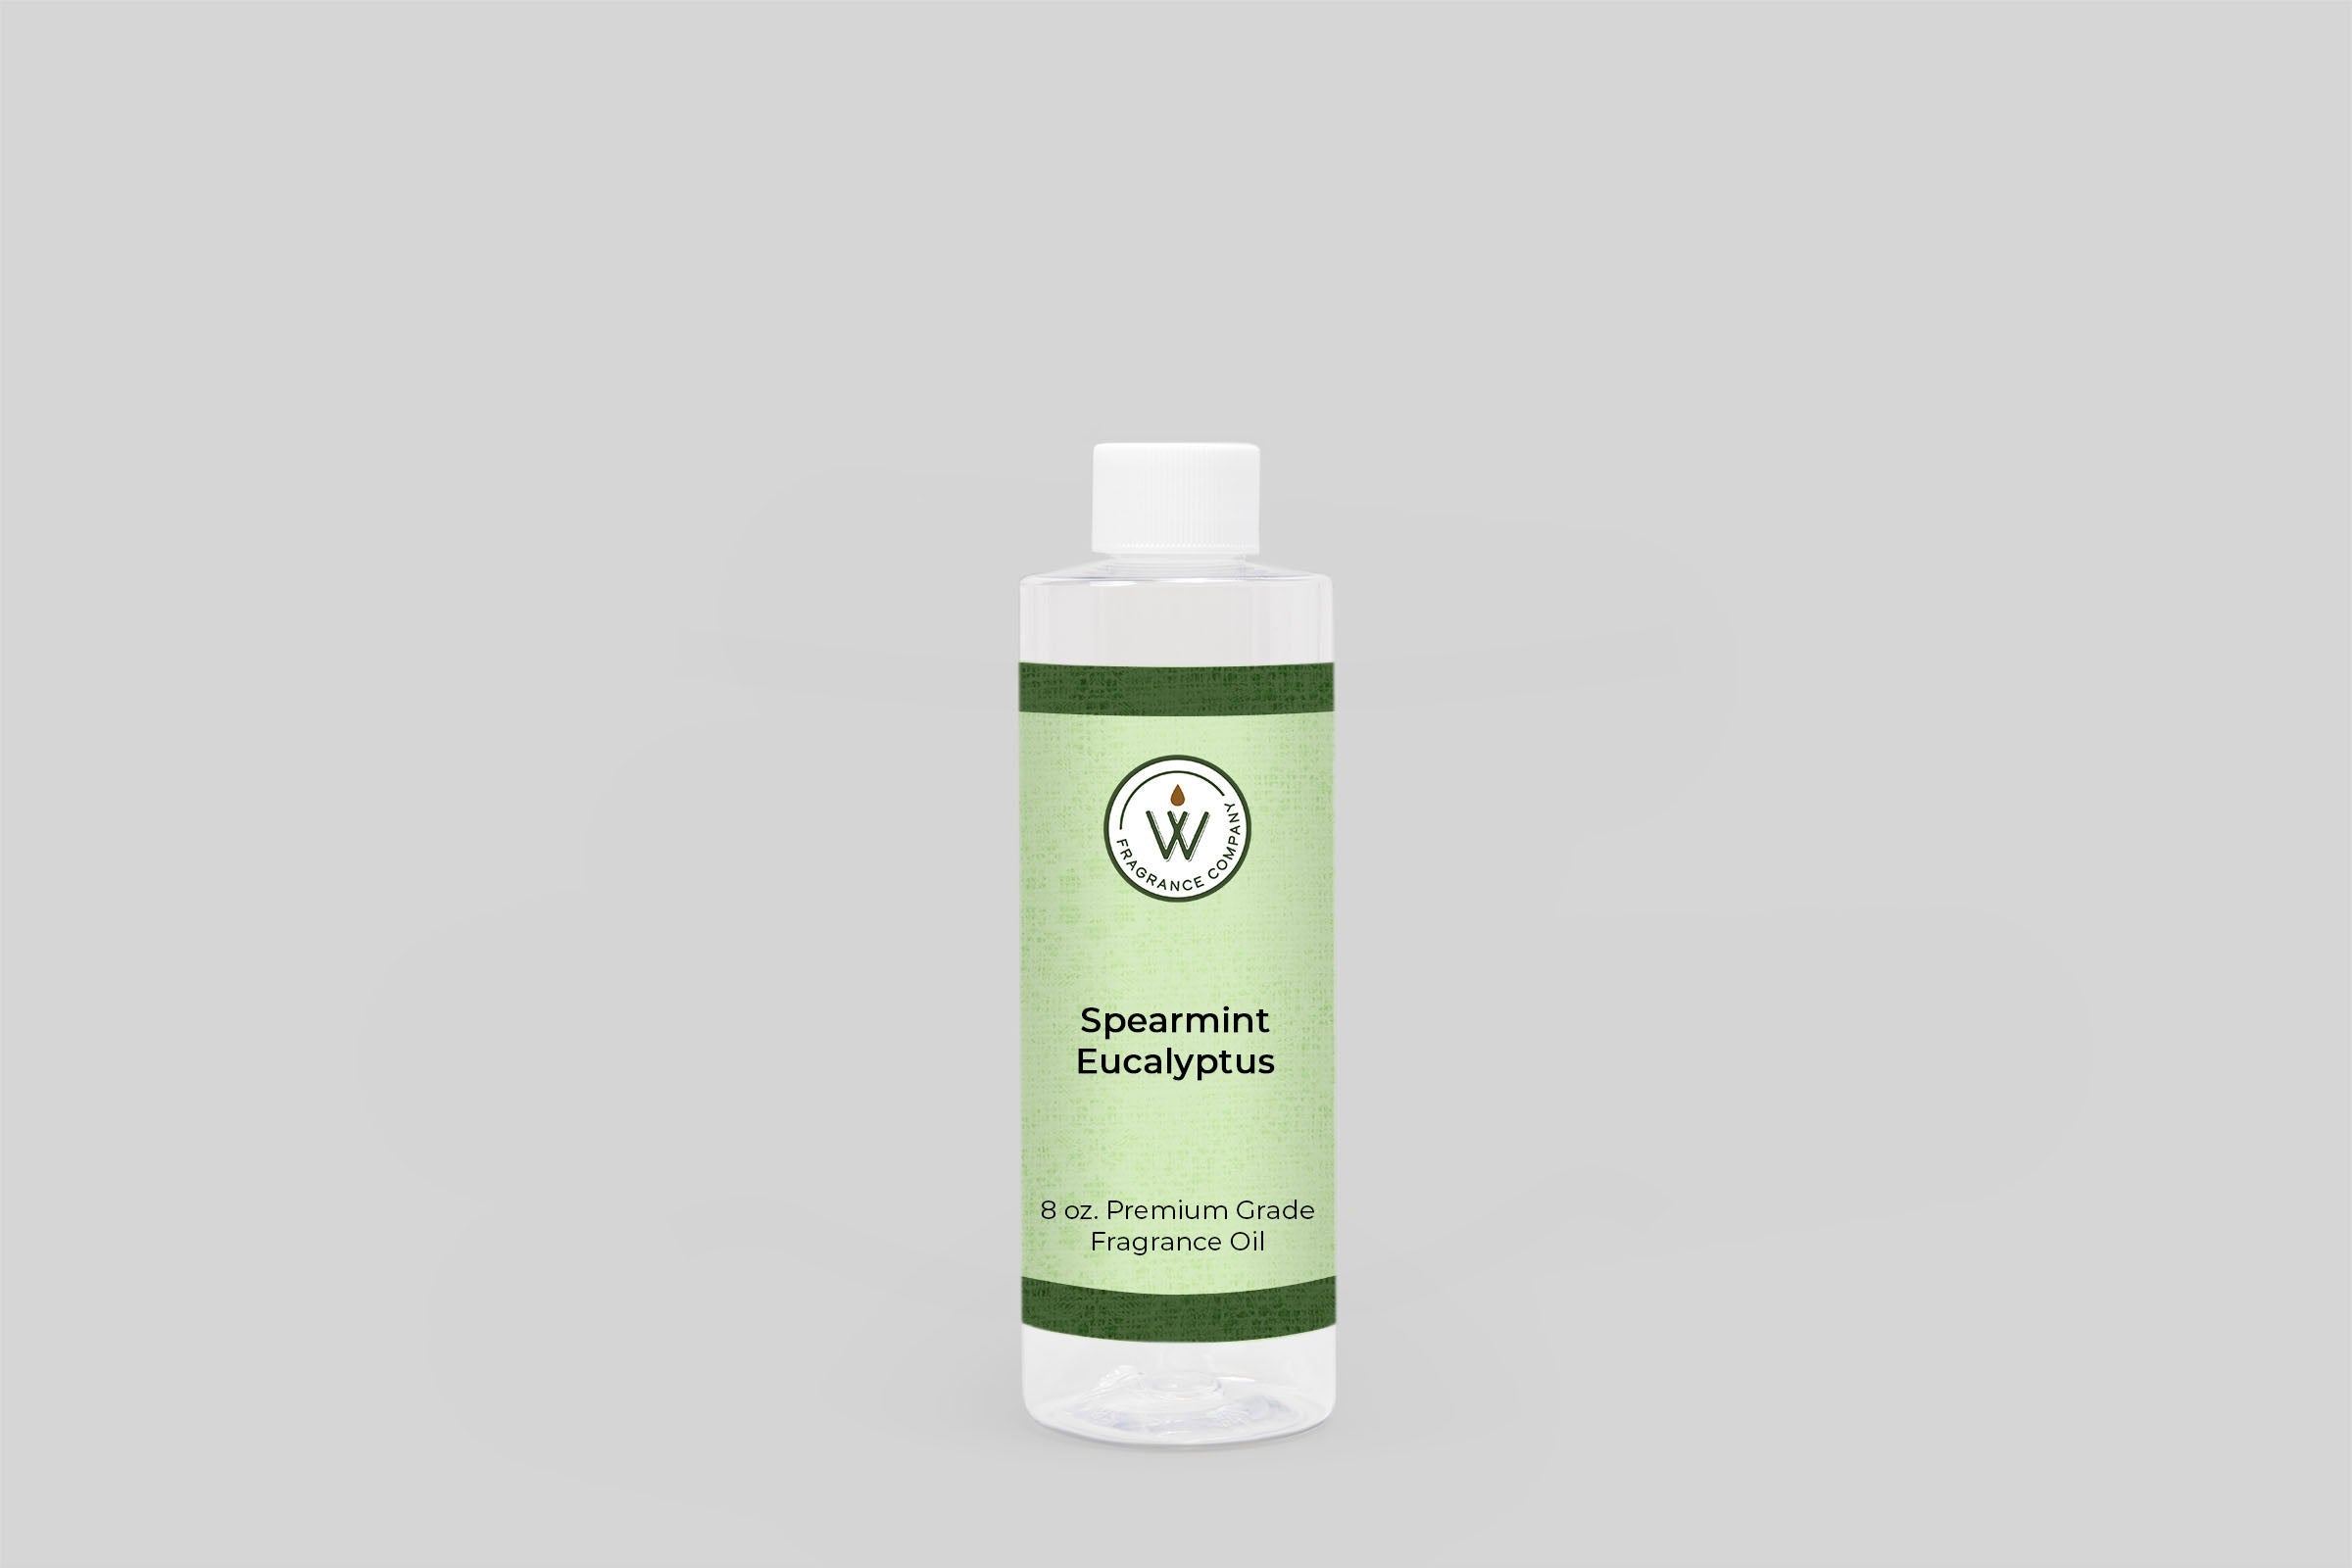 Spearmint Eucalyptus Fragrance Oil